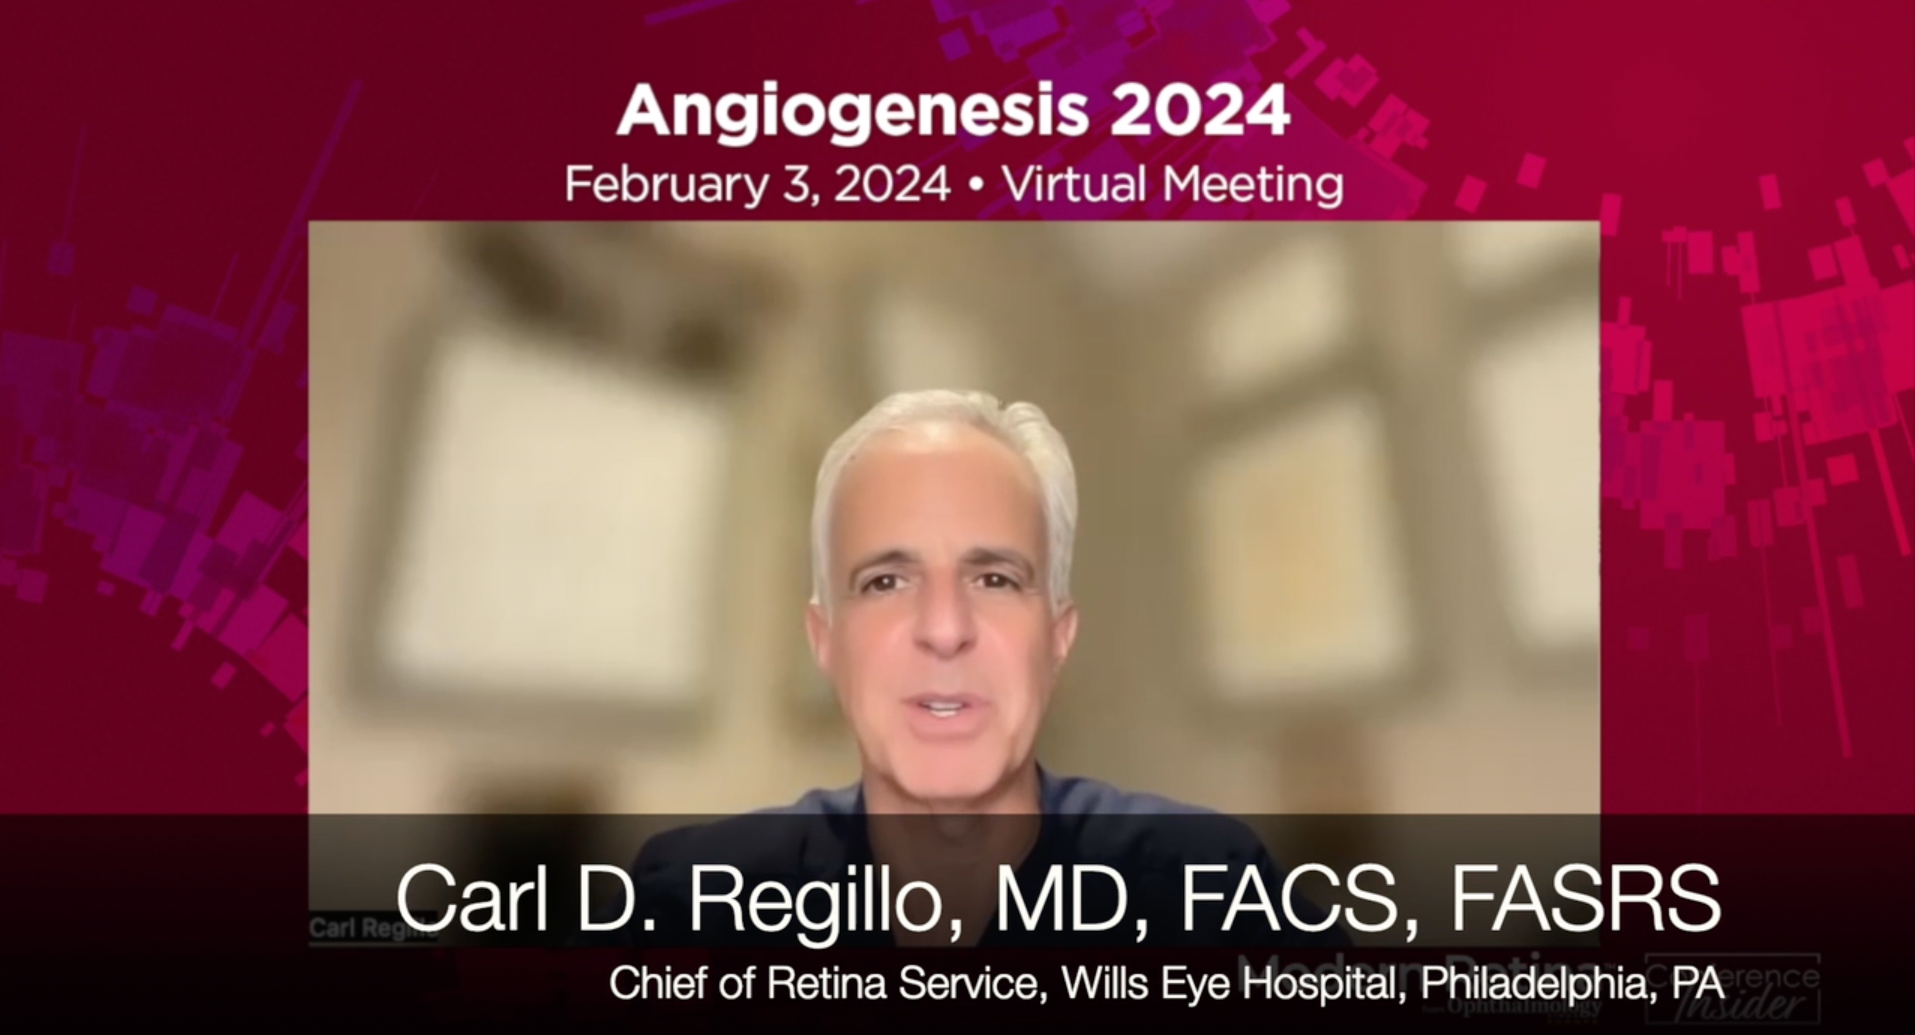 Angiogenesis 2024: DAVIO 2 trial, assessing EYP-1901 vs aflibercept for wet AMD